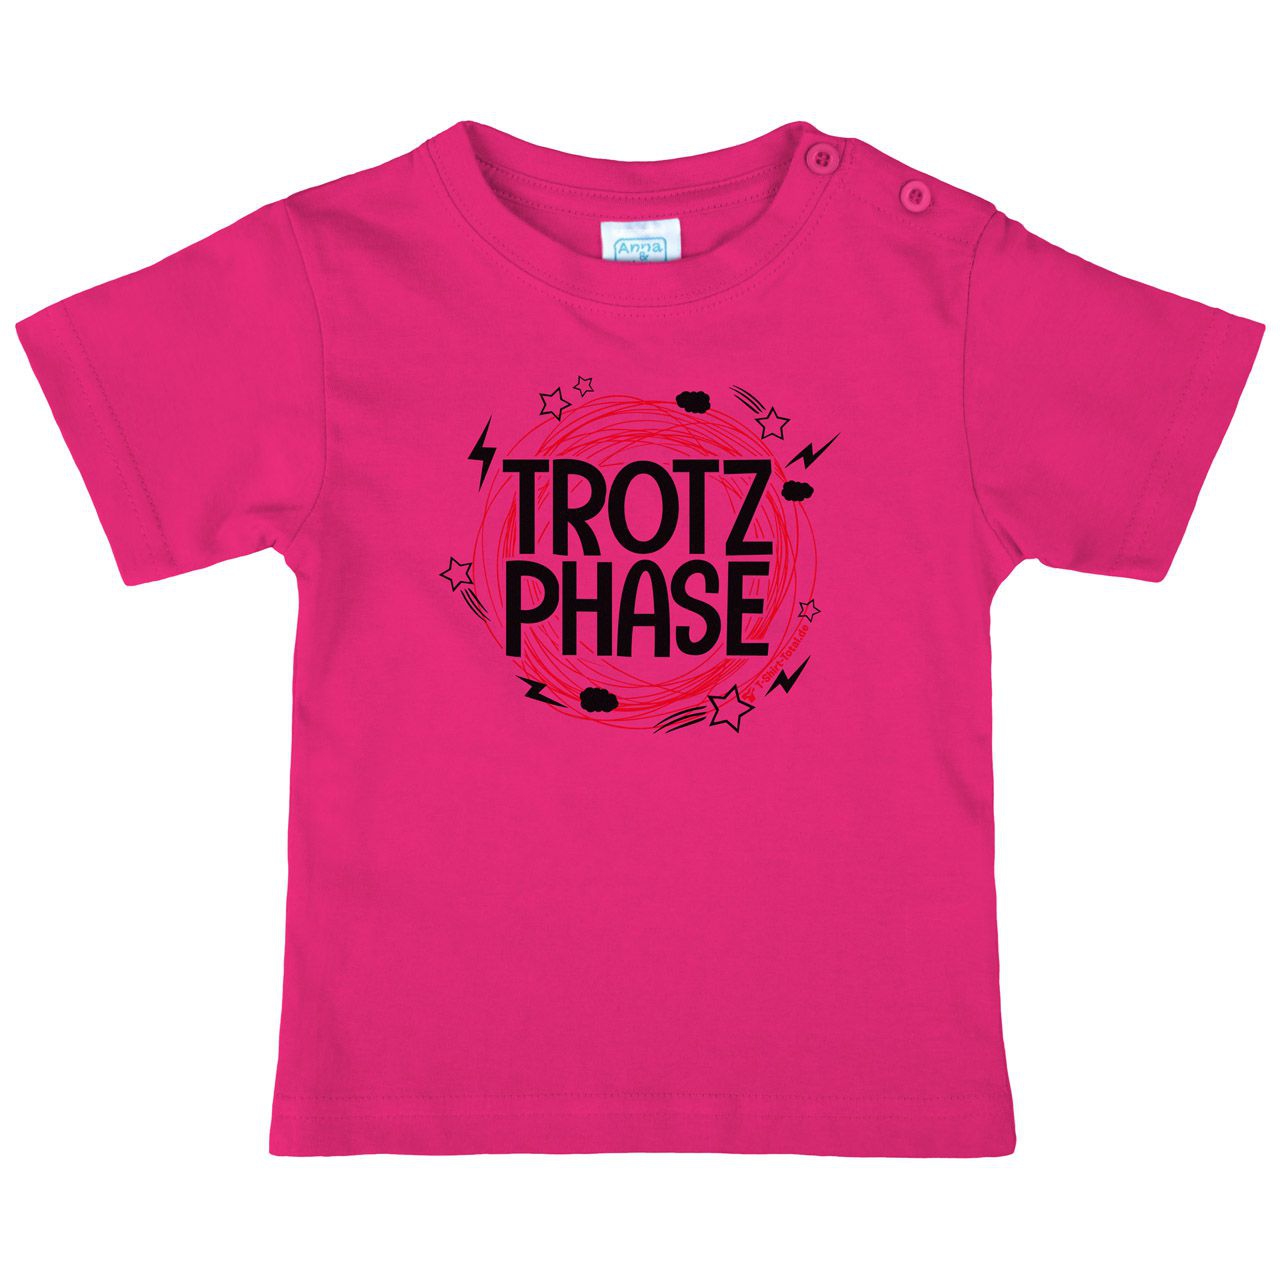 Trotzphase Kinder T-Shirt pink 104